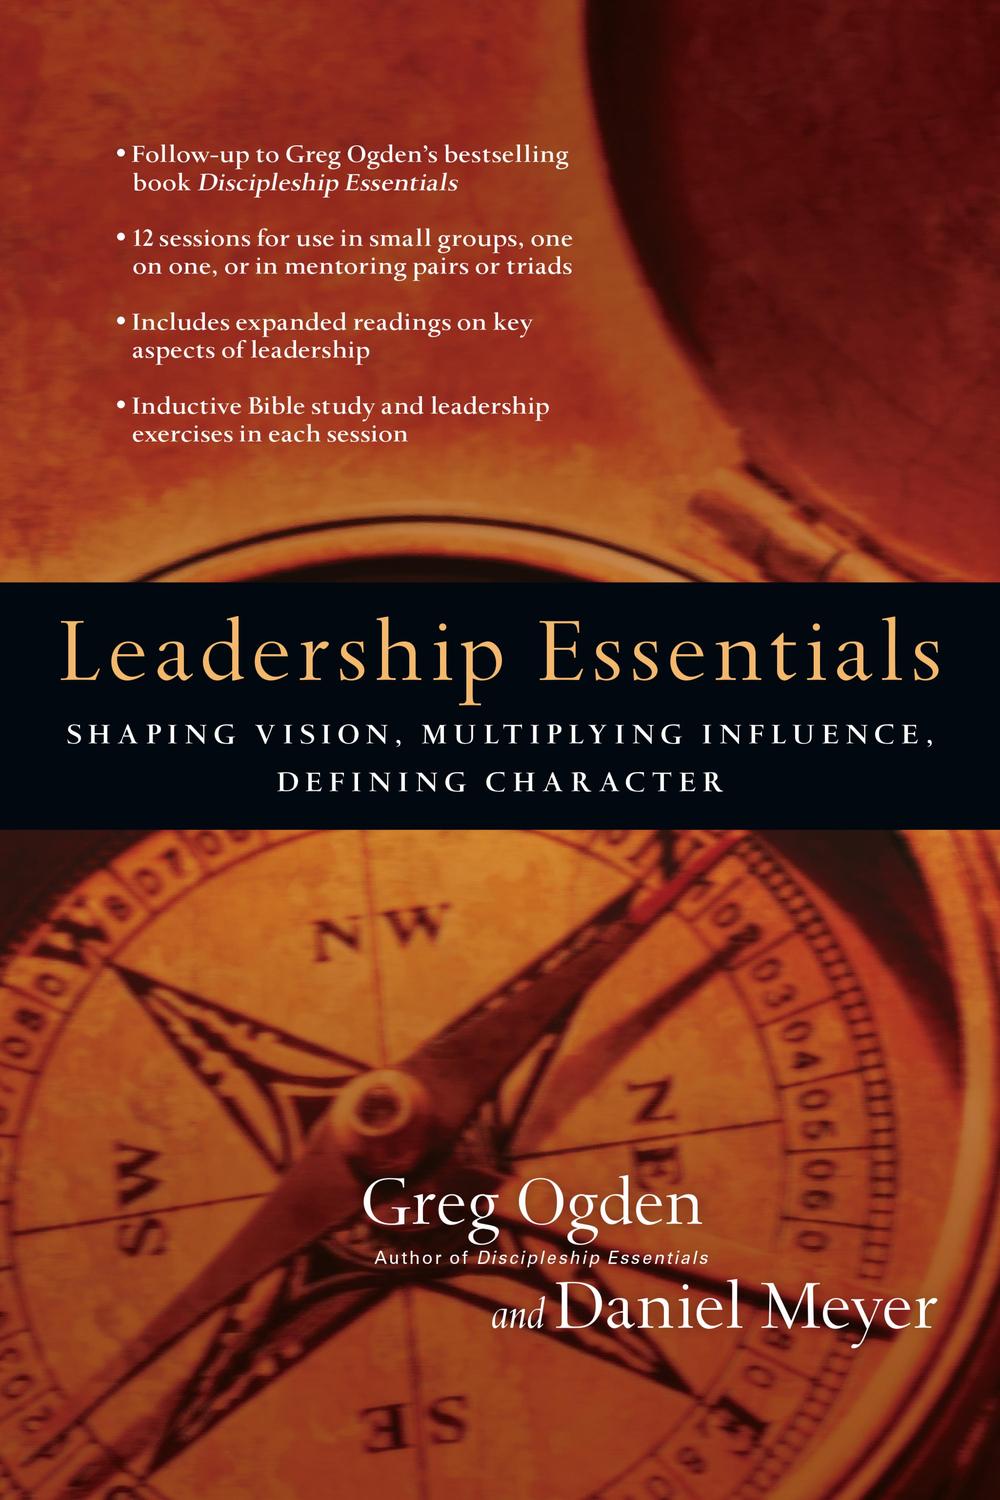 Leadership Essentials - Greg Ogden, Daniel Meyer